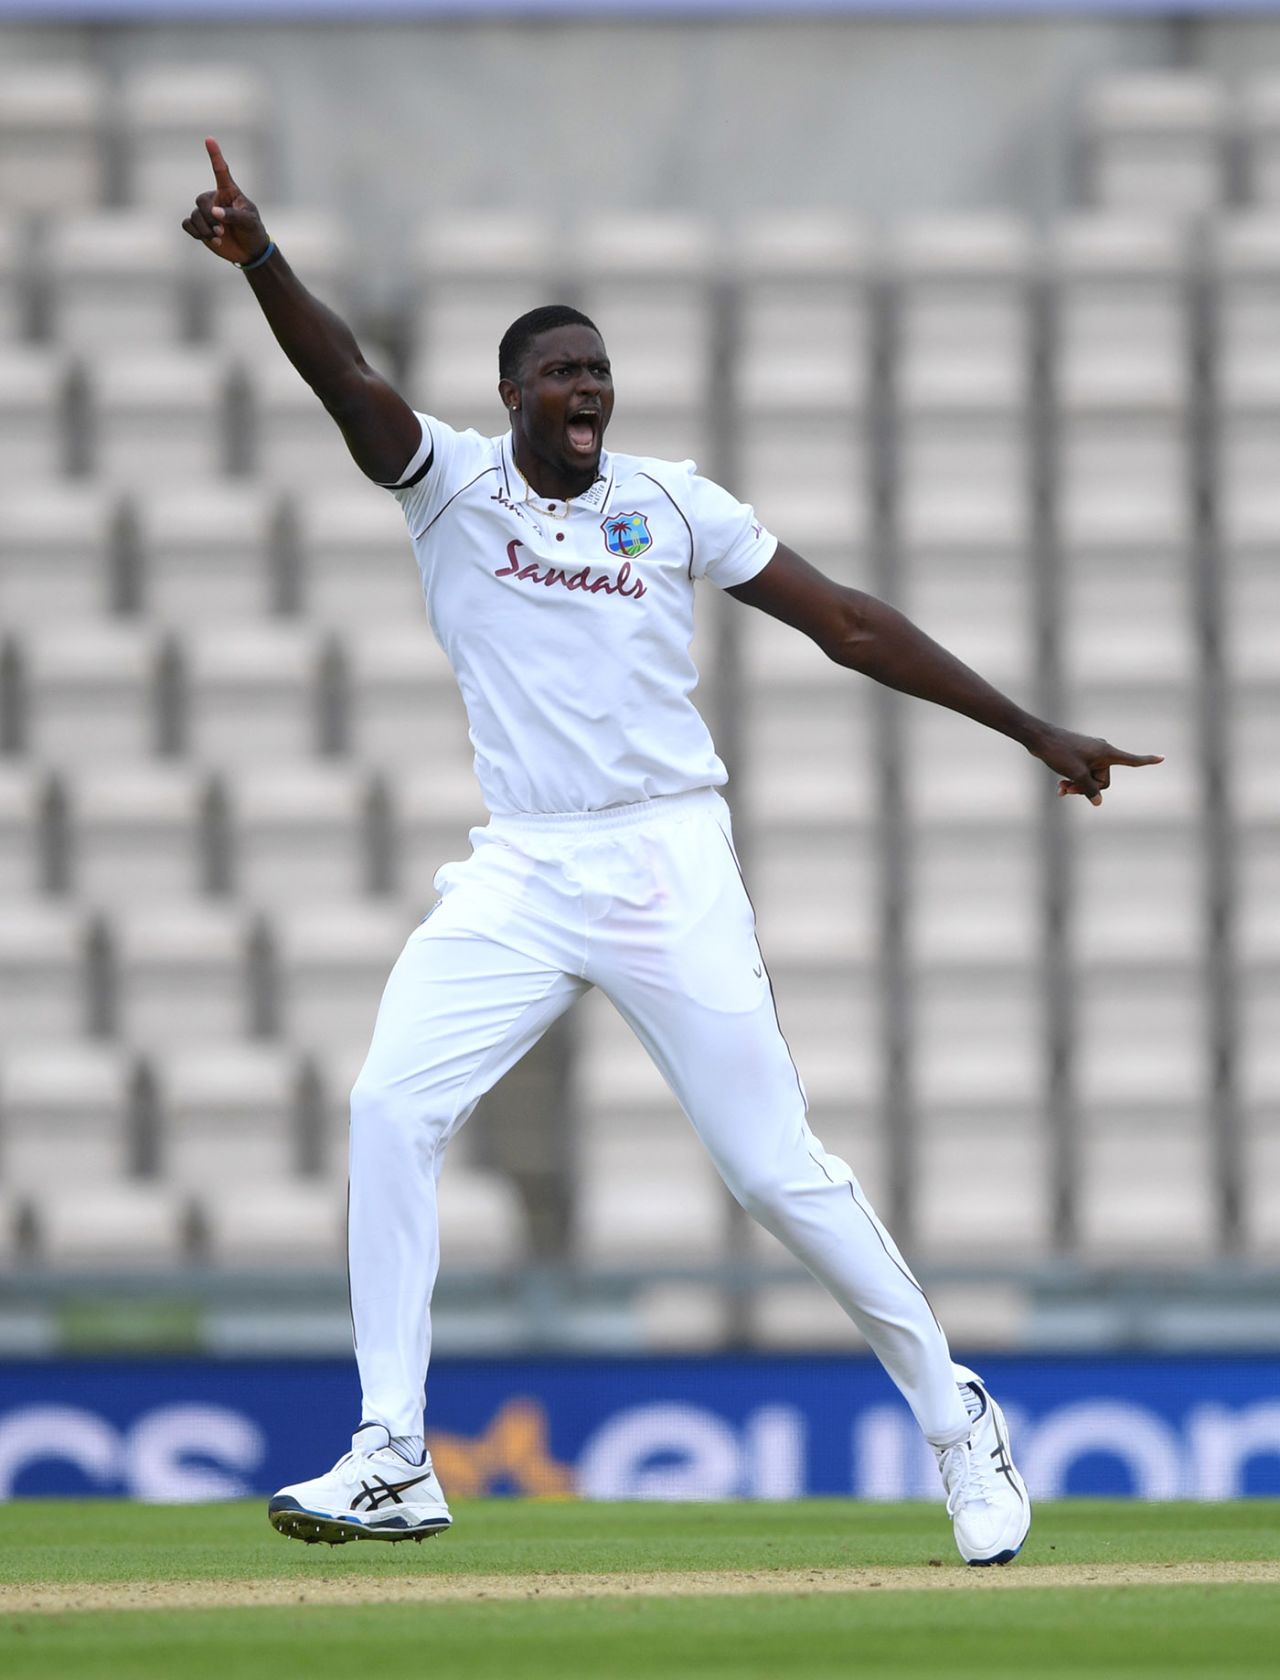 Jason Holder celebrates dismissing Ben Stokes, England v West Indies, 1st Test, day 2, Southampton, July 09, 2020